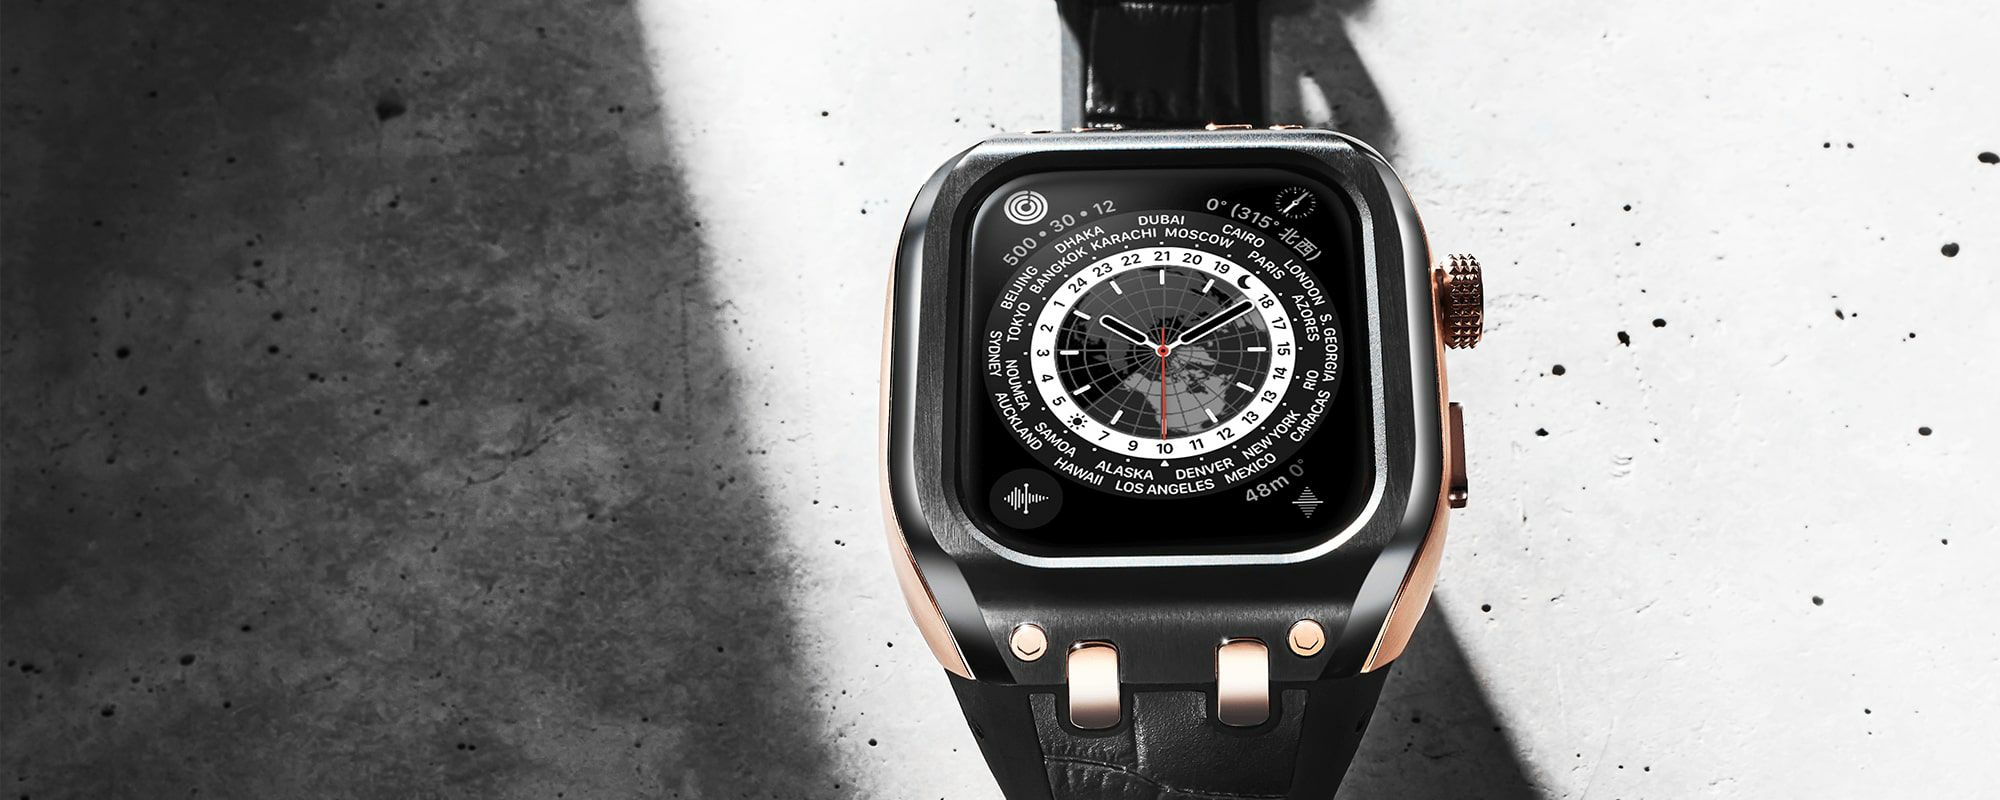 Apple Watch ケース 9/8/7対応 - HUMBLE RICH